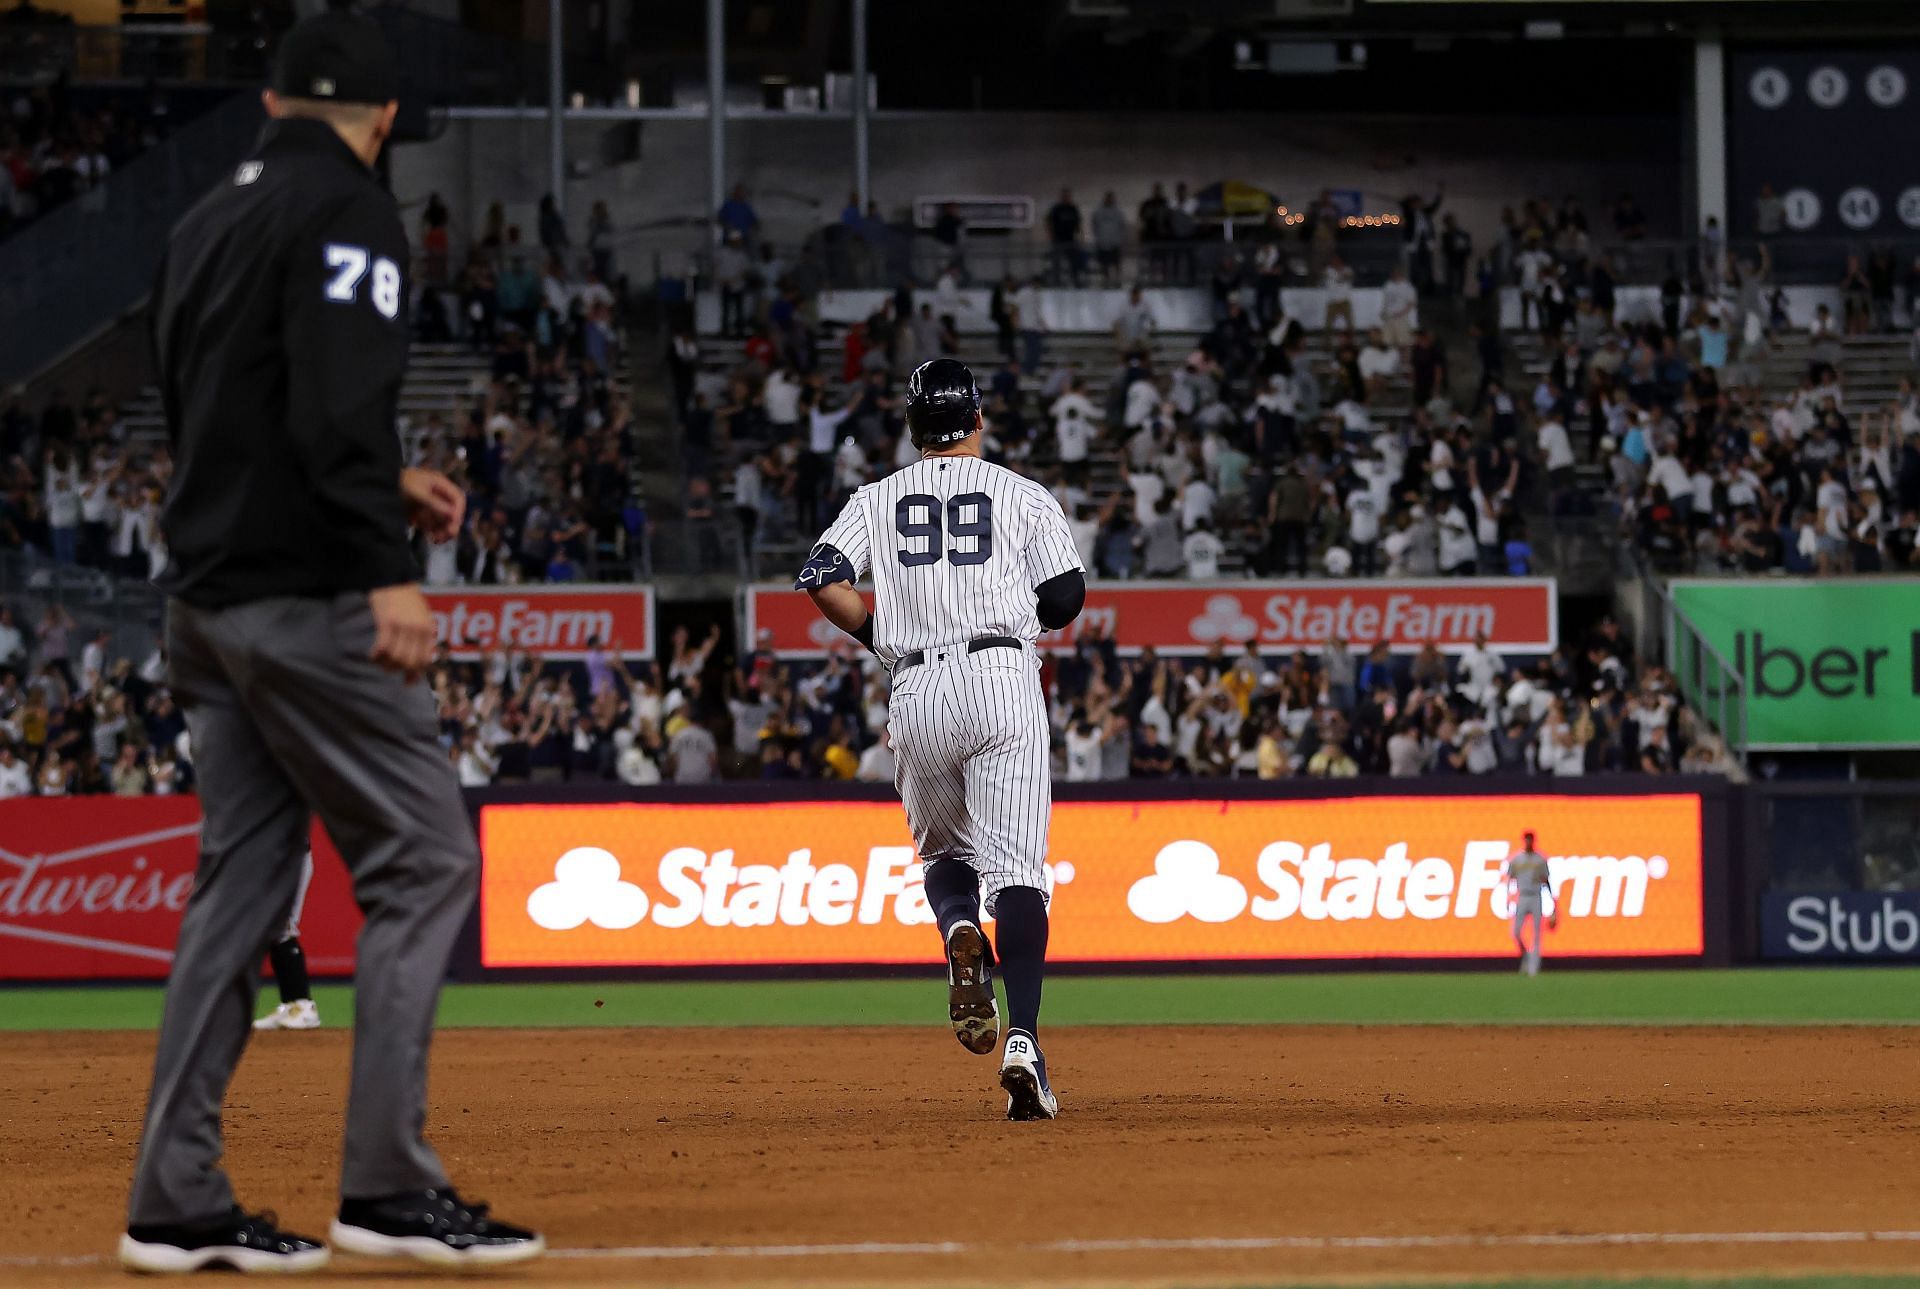 Yankees' Didi Gregorius reveals what number he'll wear in 2015